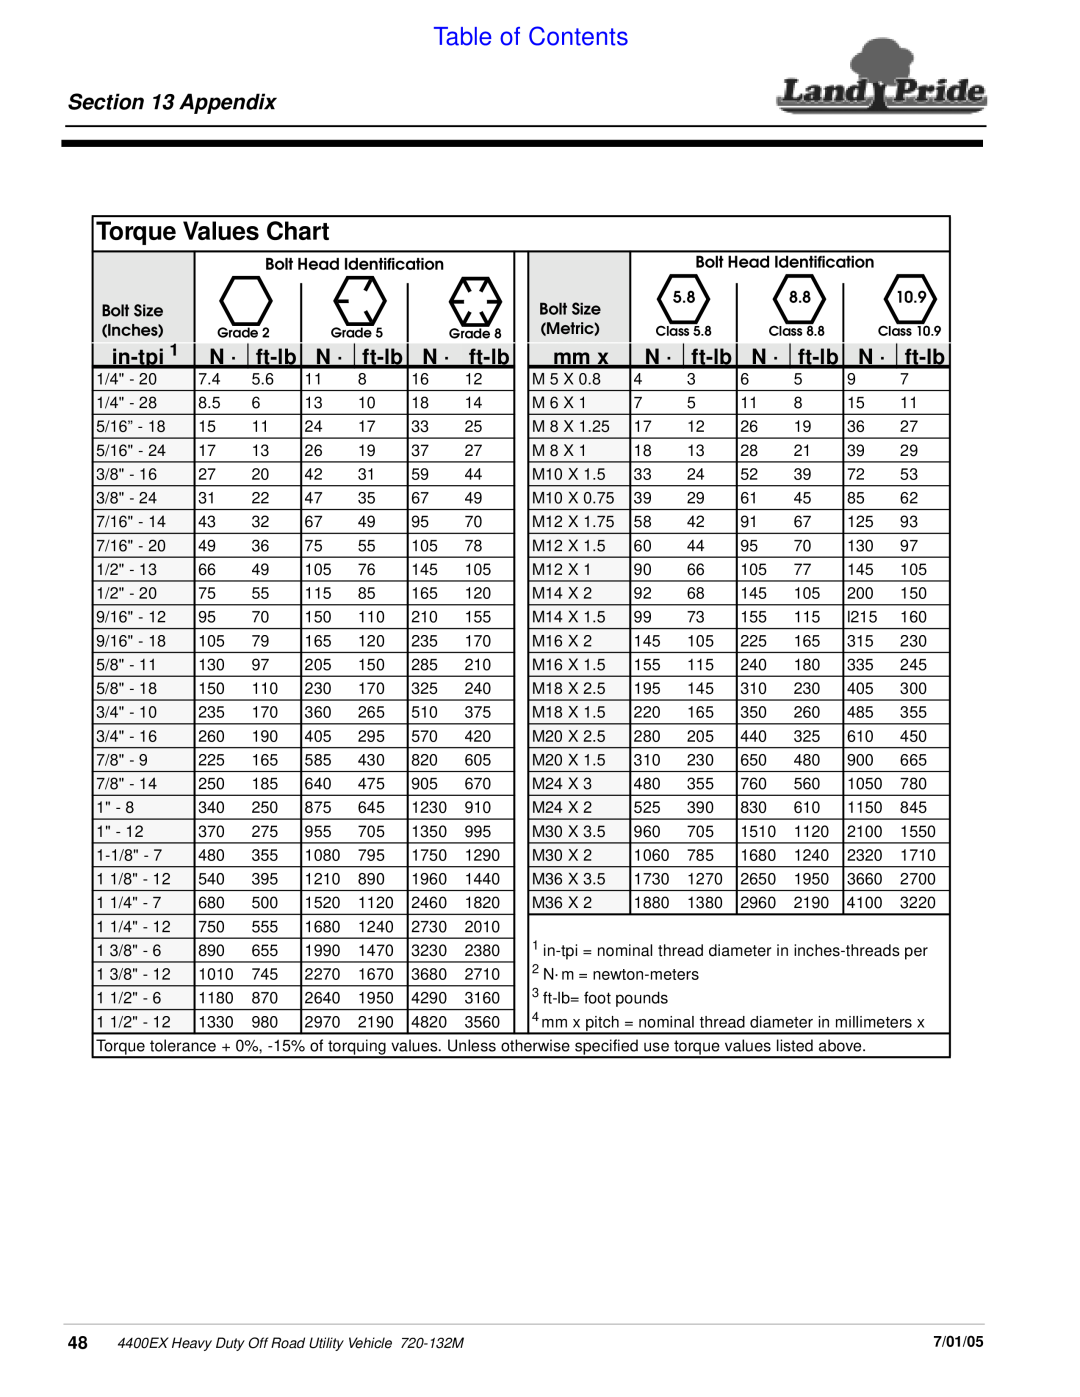 Land Pride 22081, 720-132M, 22076 manual Torque Values Chart, Appendix, in-tpi, ft-lb, Table of Contents 